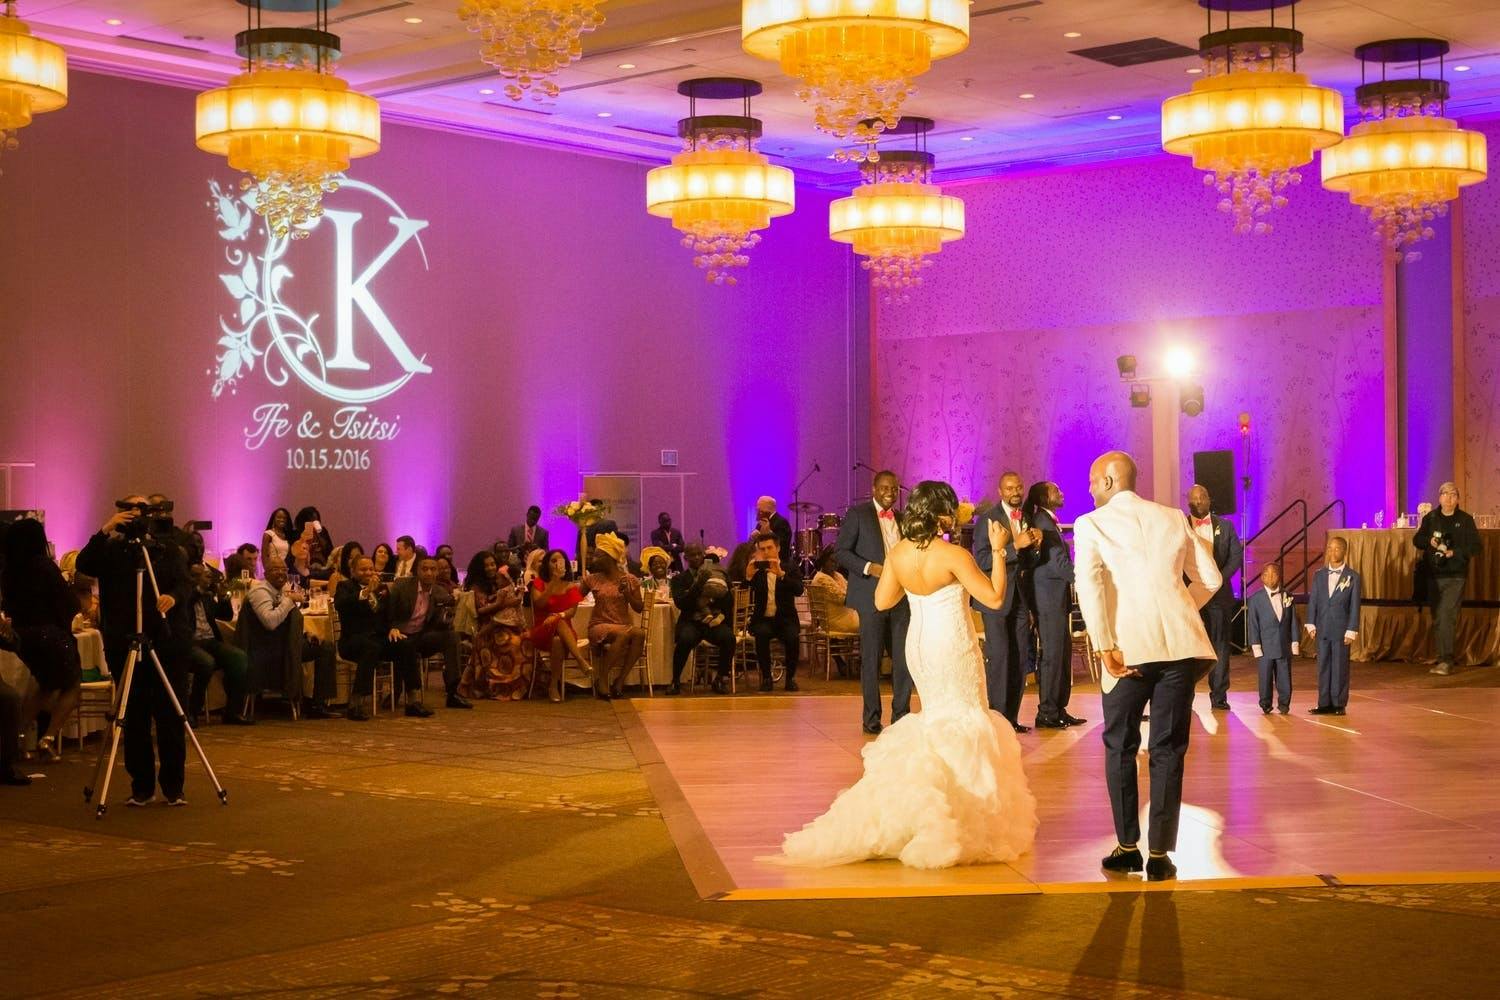 Ballroom wedding with dance floor, purple uplighting, and floral monogrammed gobo | PartySlate